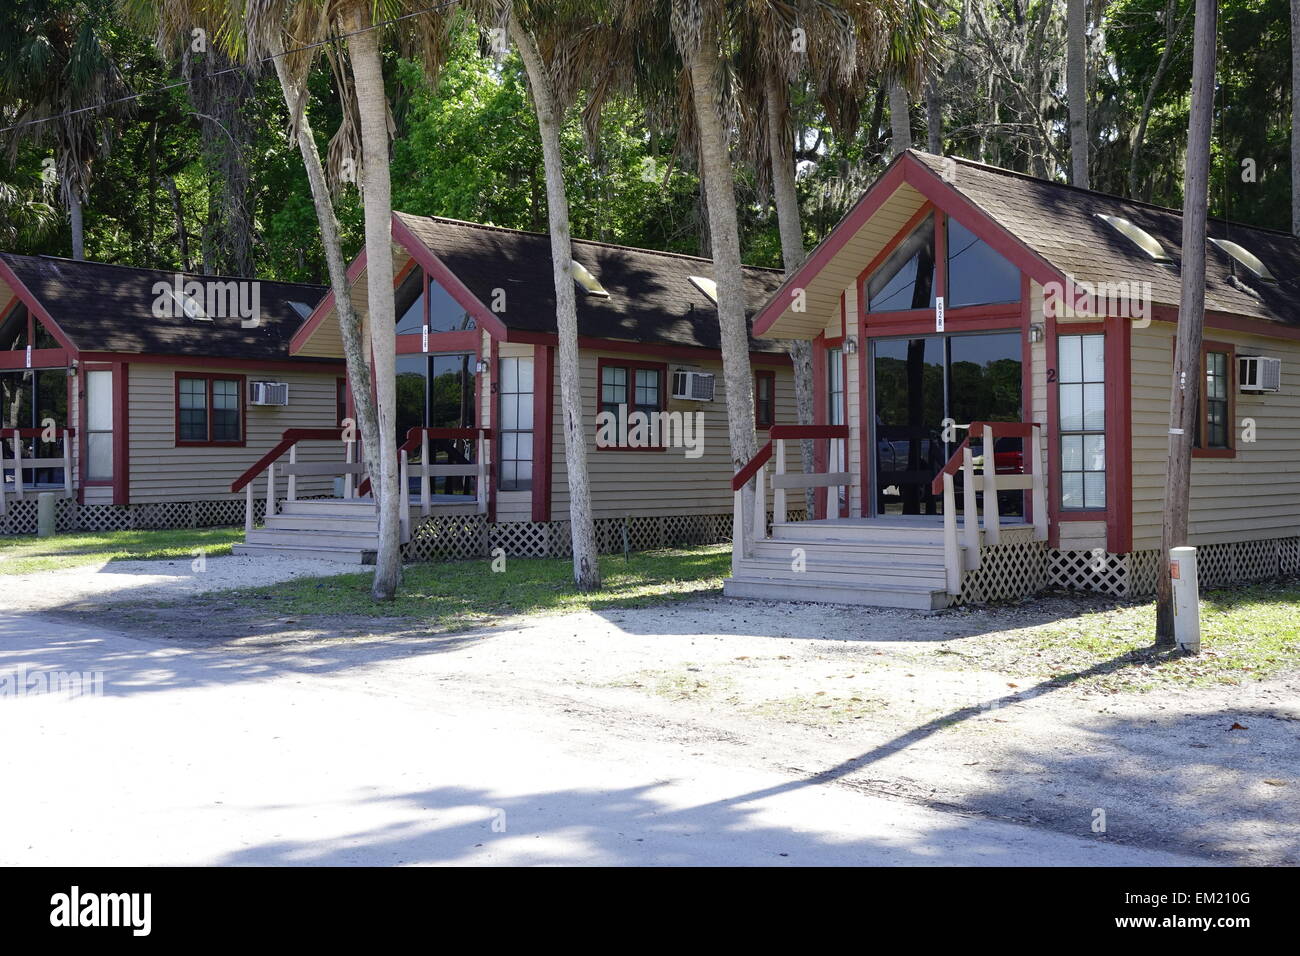 Rental cabins at Nature's resort, Homosassa, Florida Stock Photo